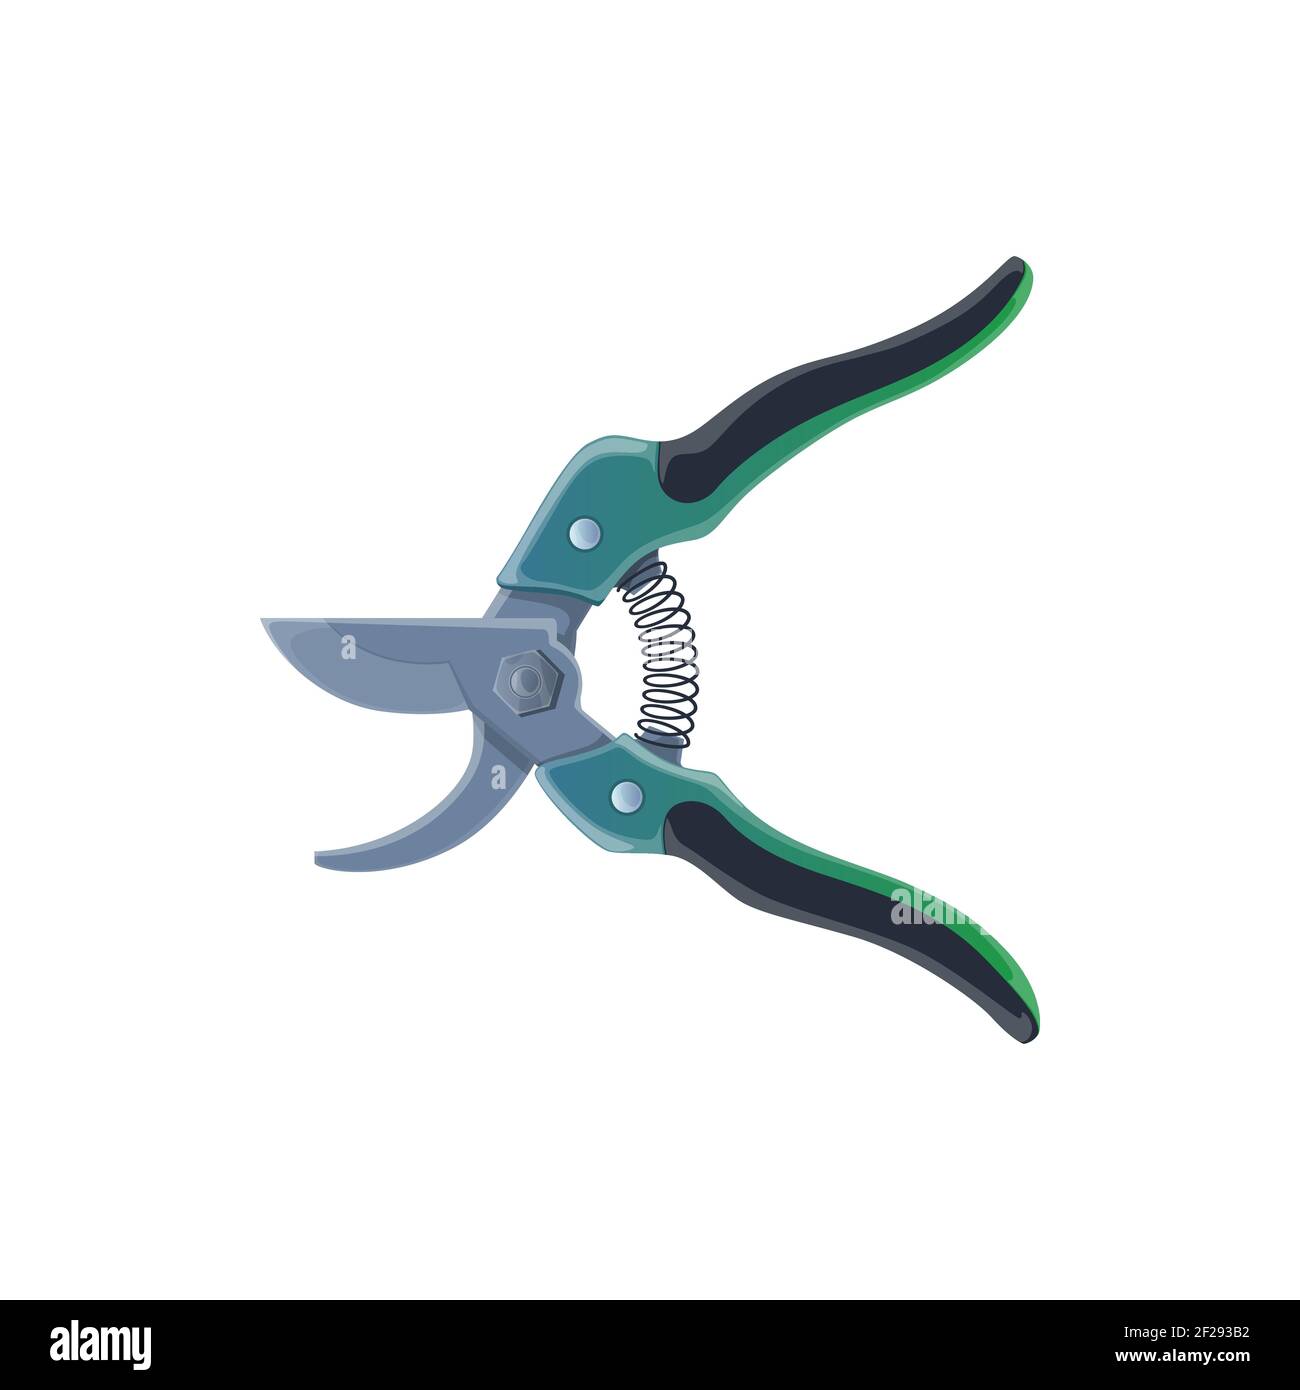 Garden shears, pruning scissors vector icon. Tool for gardening works, pruner instrument, hand equipment for gardeners isolated cartoon secateurs on w Stock Vector